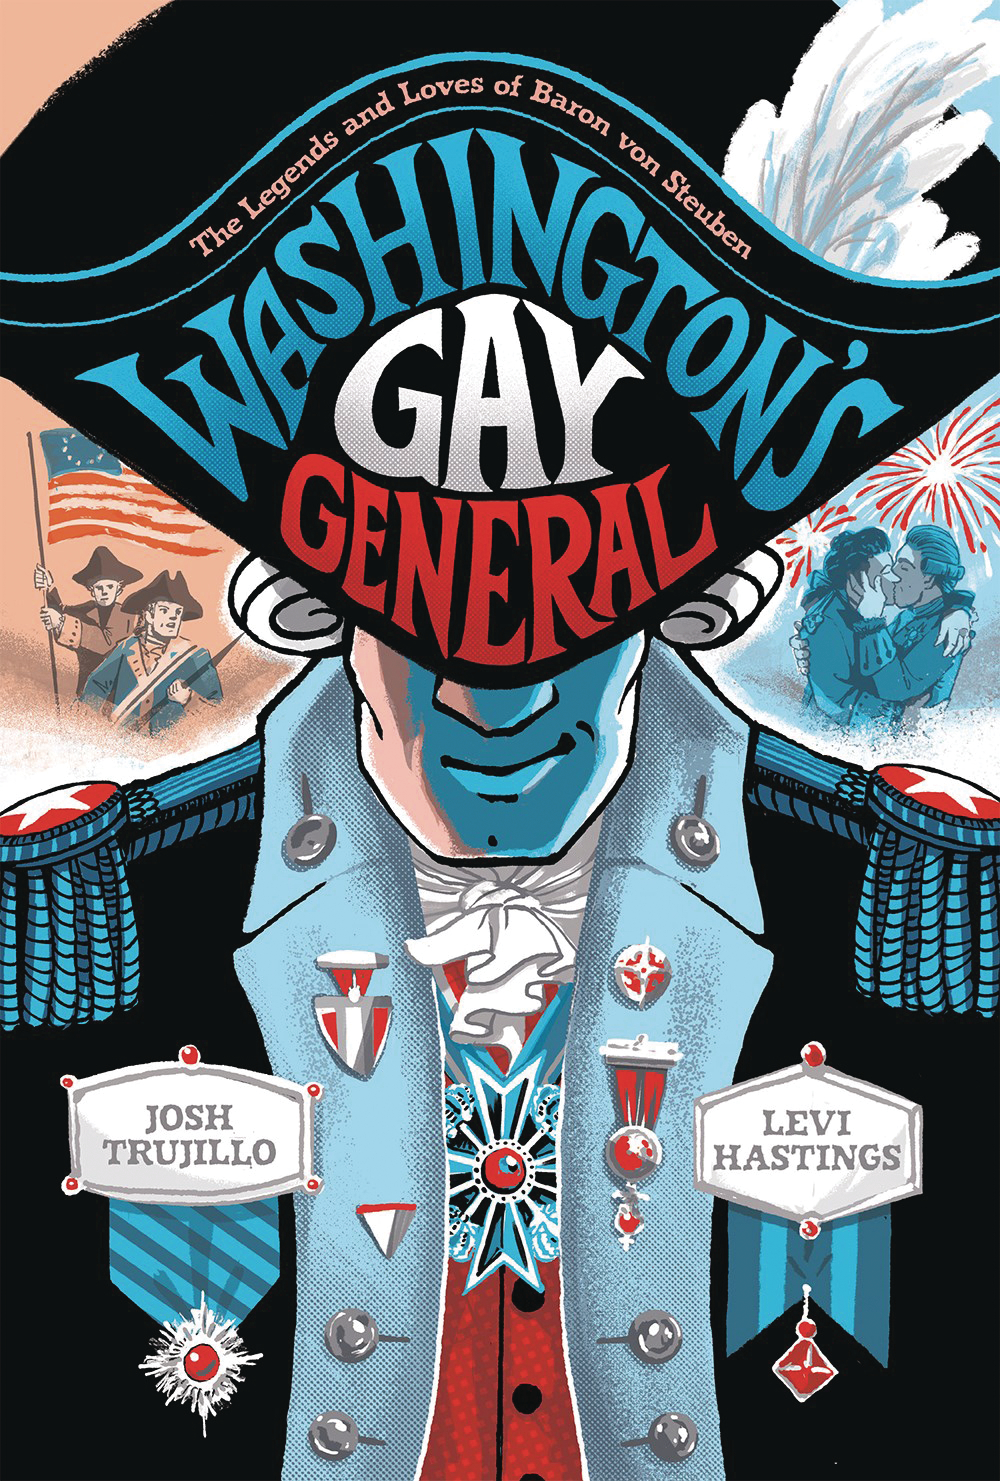 Washingtons Gay General Hardcover Graphic Novel (Mature)